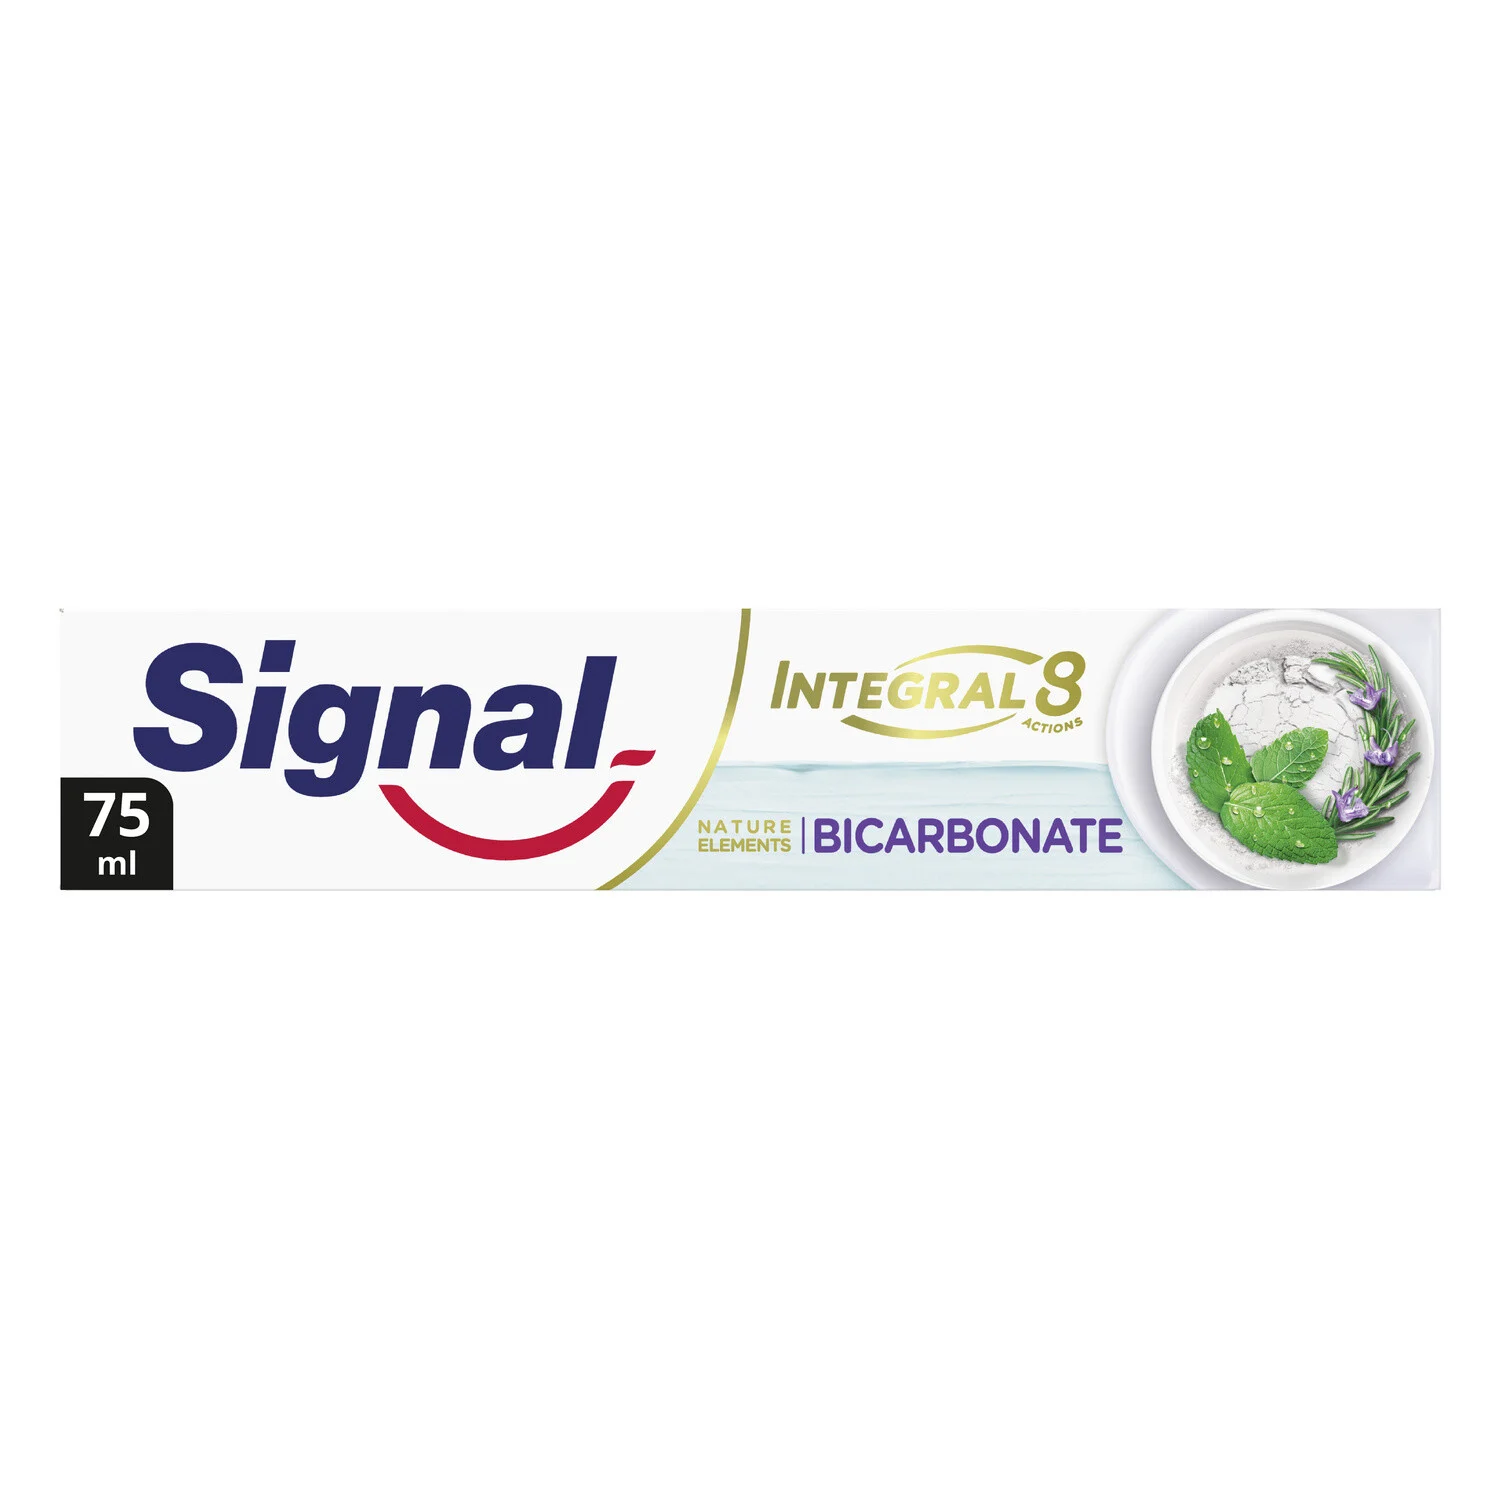 Dentifrice Integral 8 Nature Elements Bicarbonate 75ml - Signal